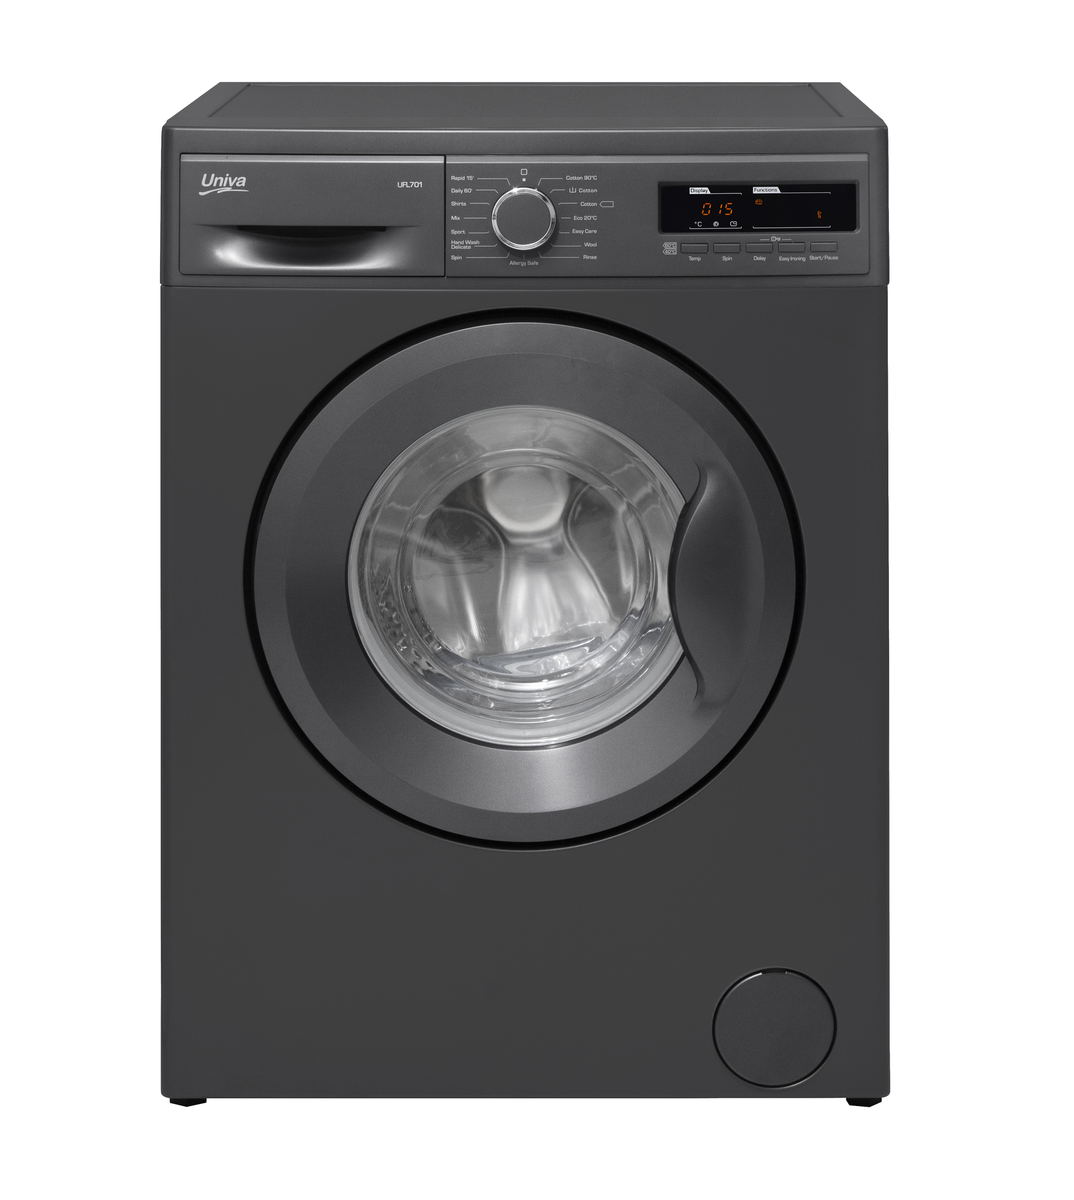 Univa 7kg Front Load Washing Machine